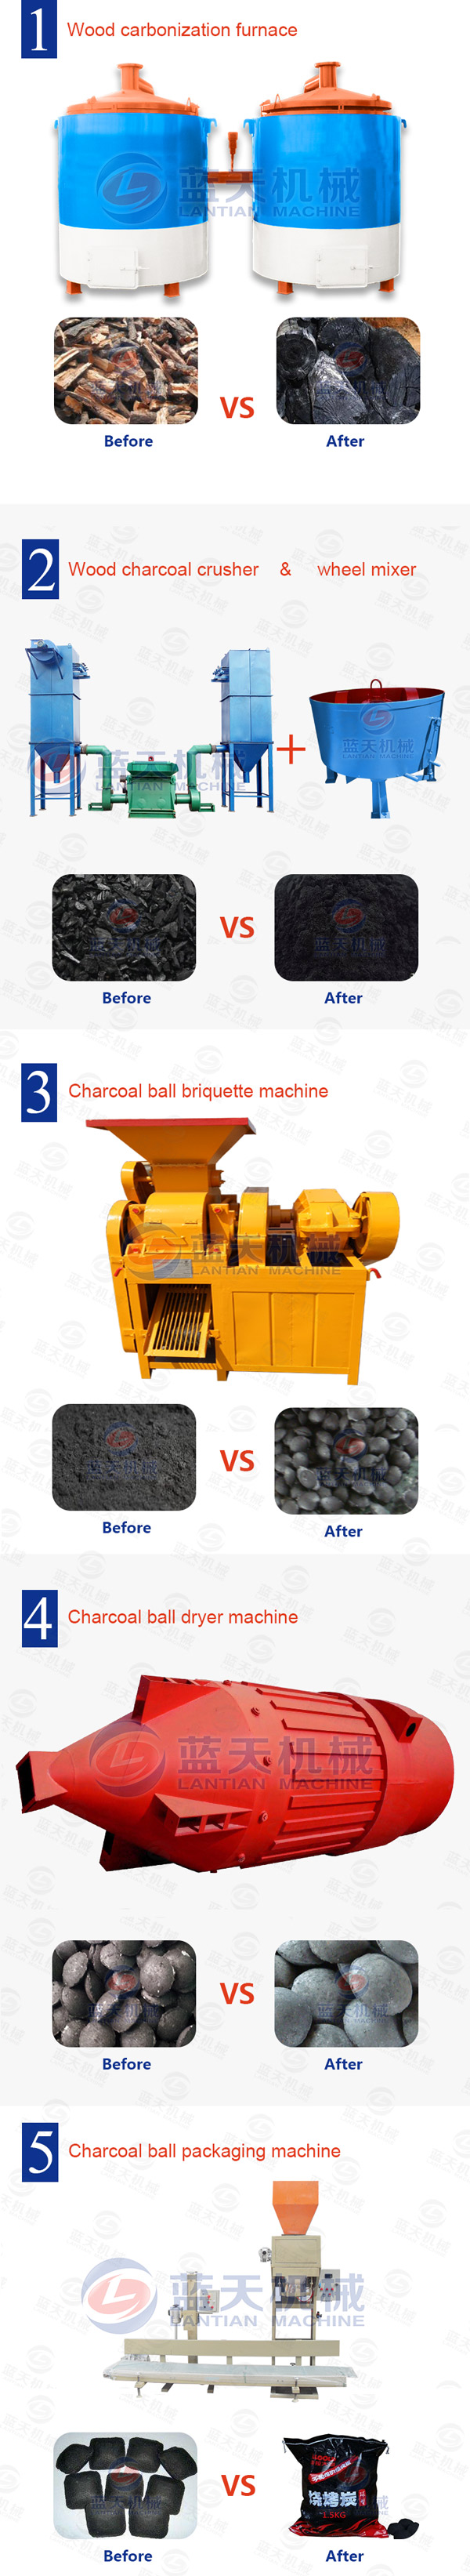 Charcoal Ball Briquette Machine